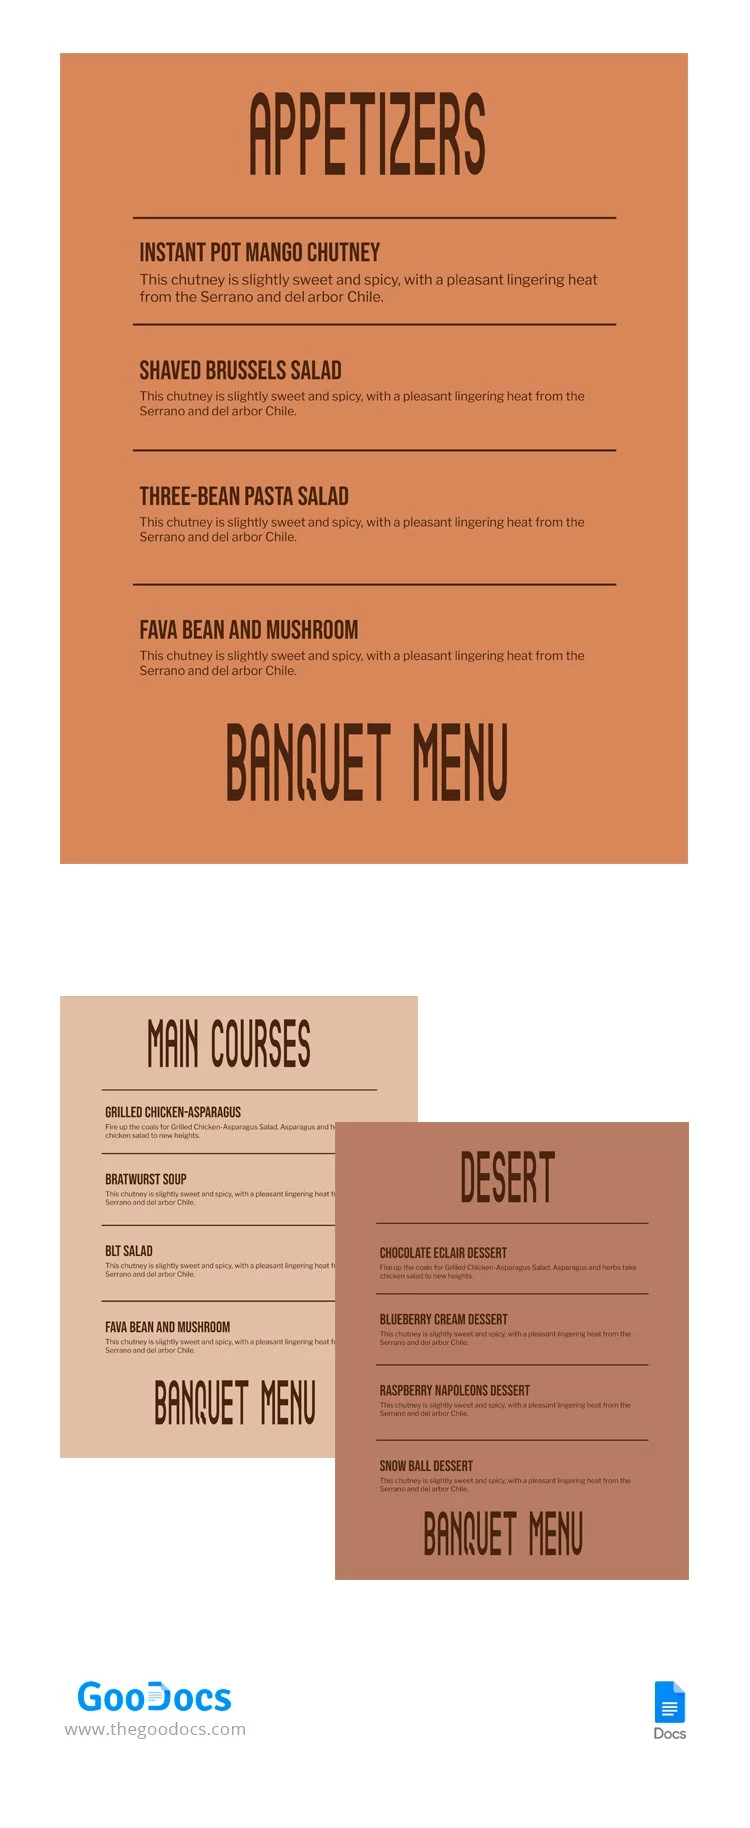 Menu de Restaurante de Banquete - free Google Docs Template - 10064444